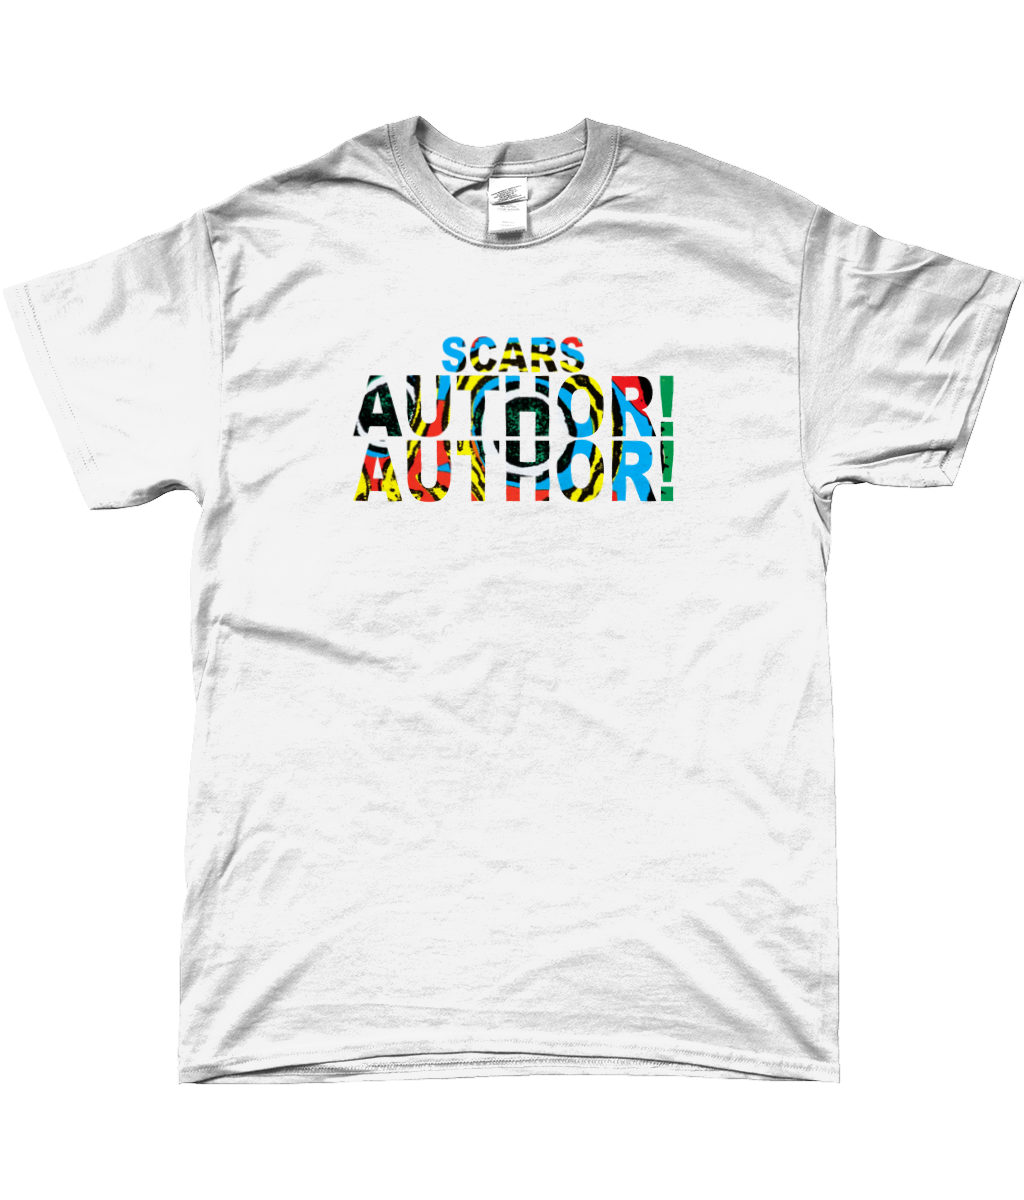 Scars Author Author t-shirt